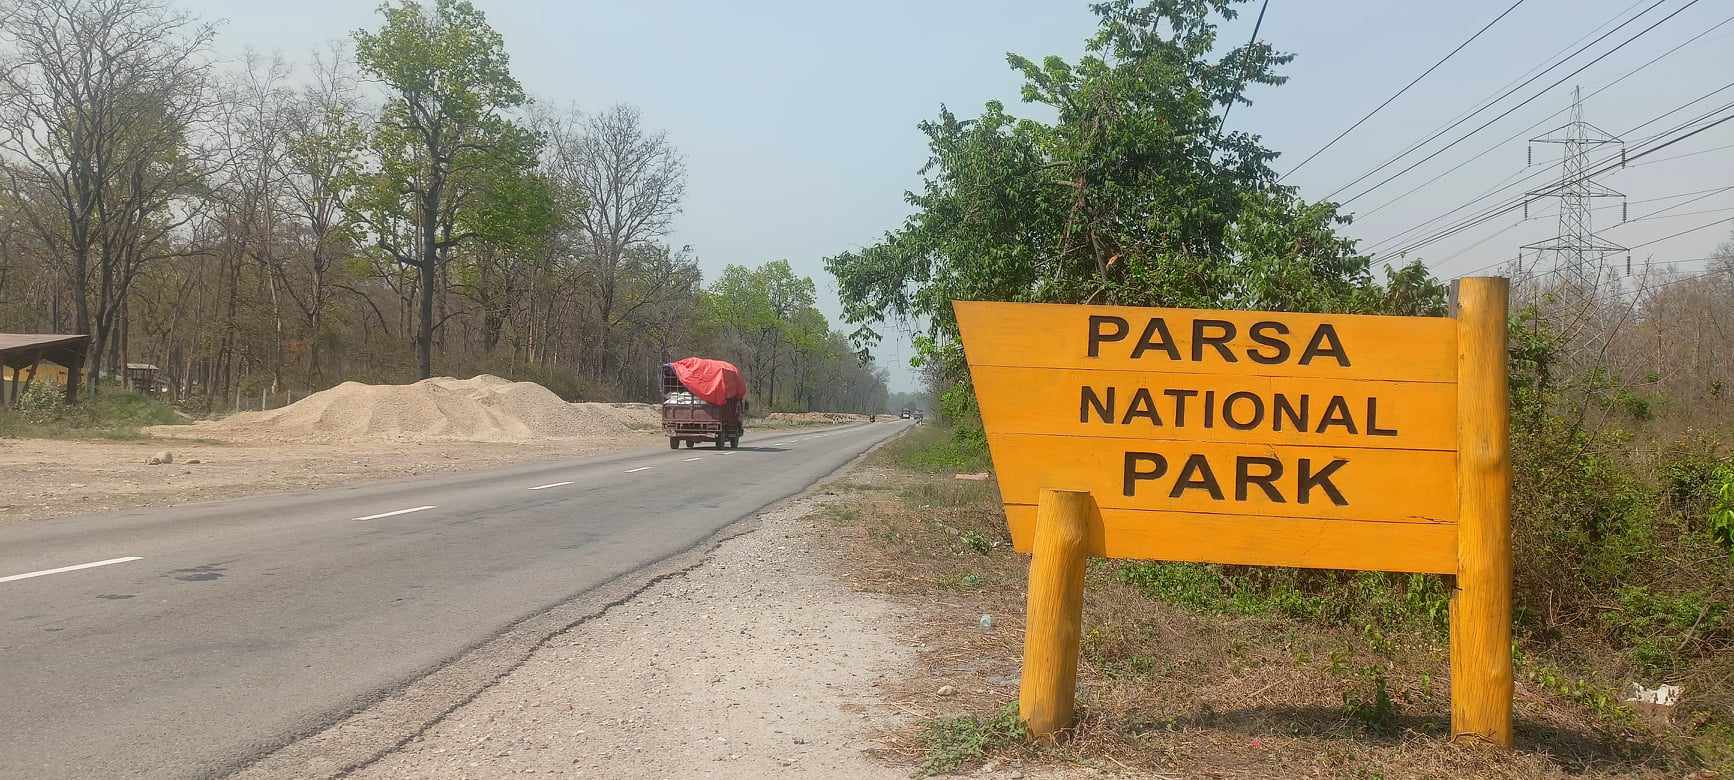 parsa national park (4)